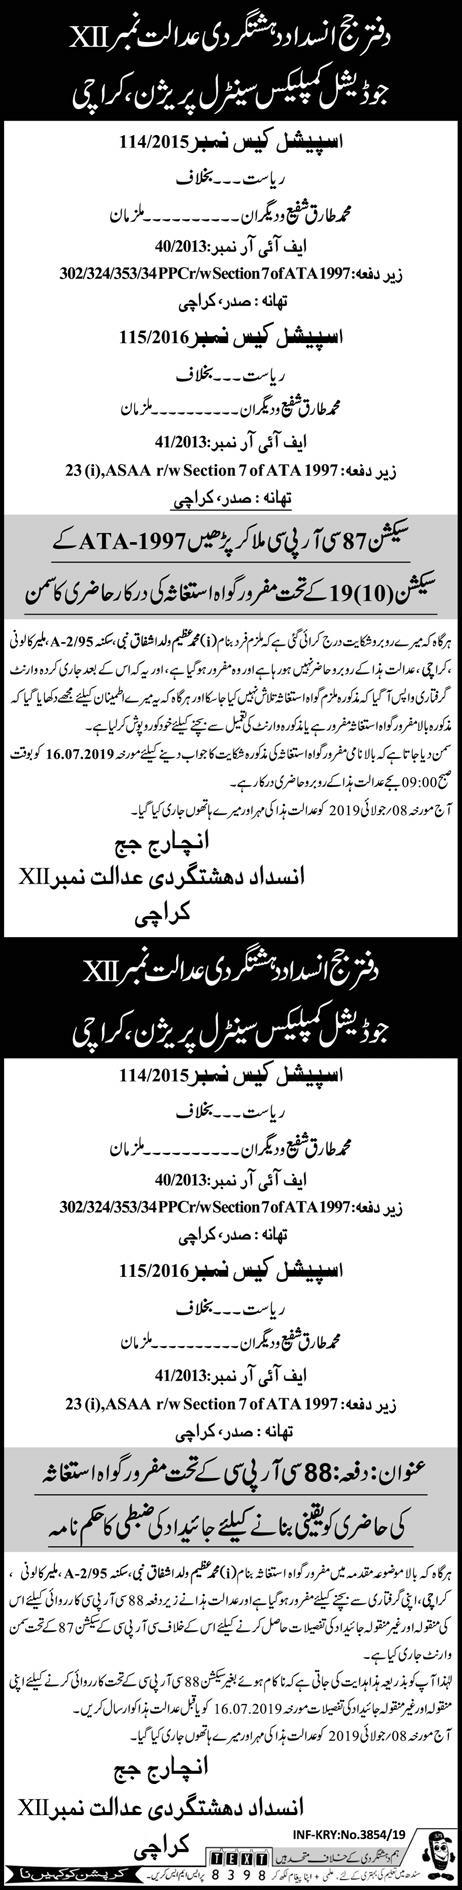 Pak Complaints-Muhammad Tariaq Shafi | Malir Colony, Karachi | Mufror